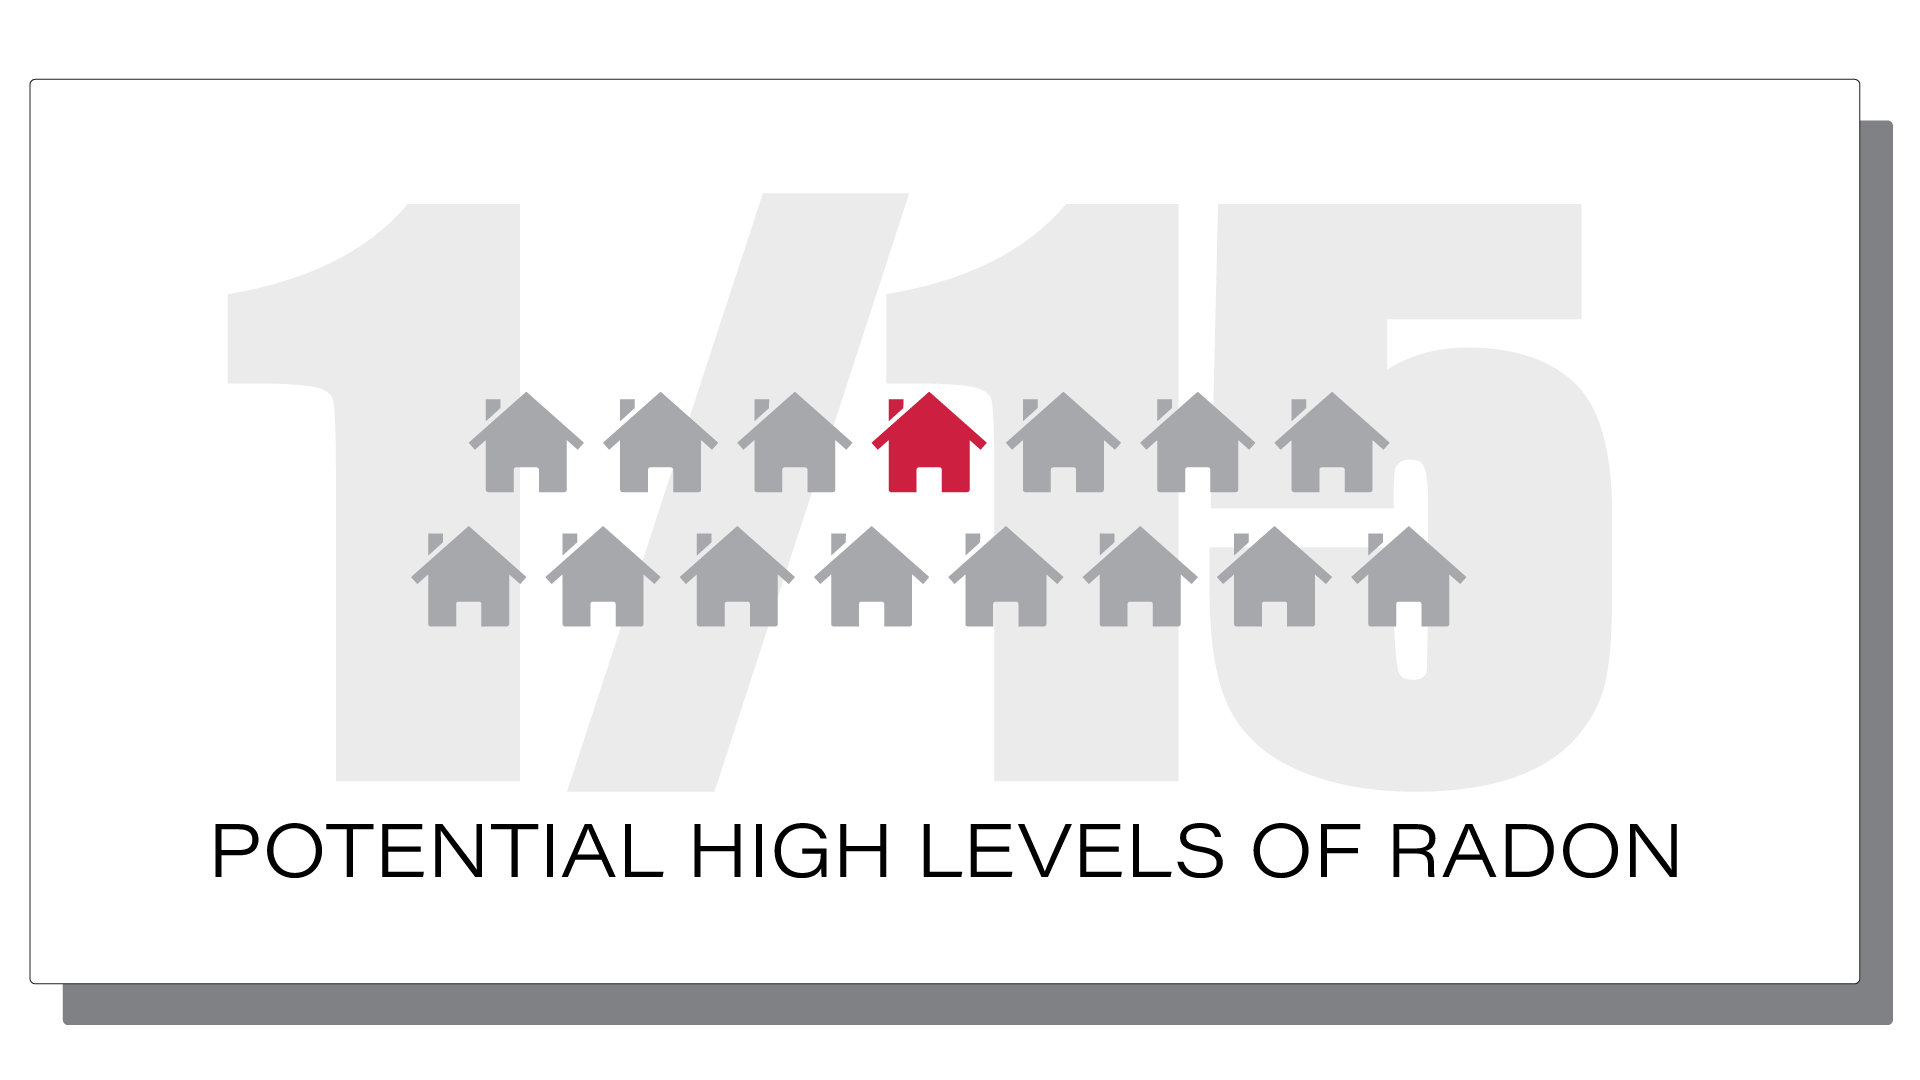 1 in 15 homes have radon